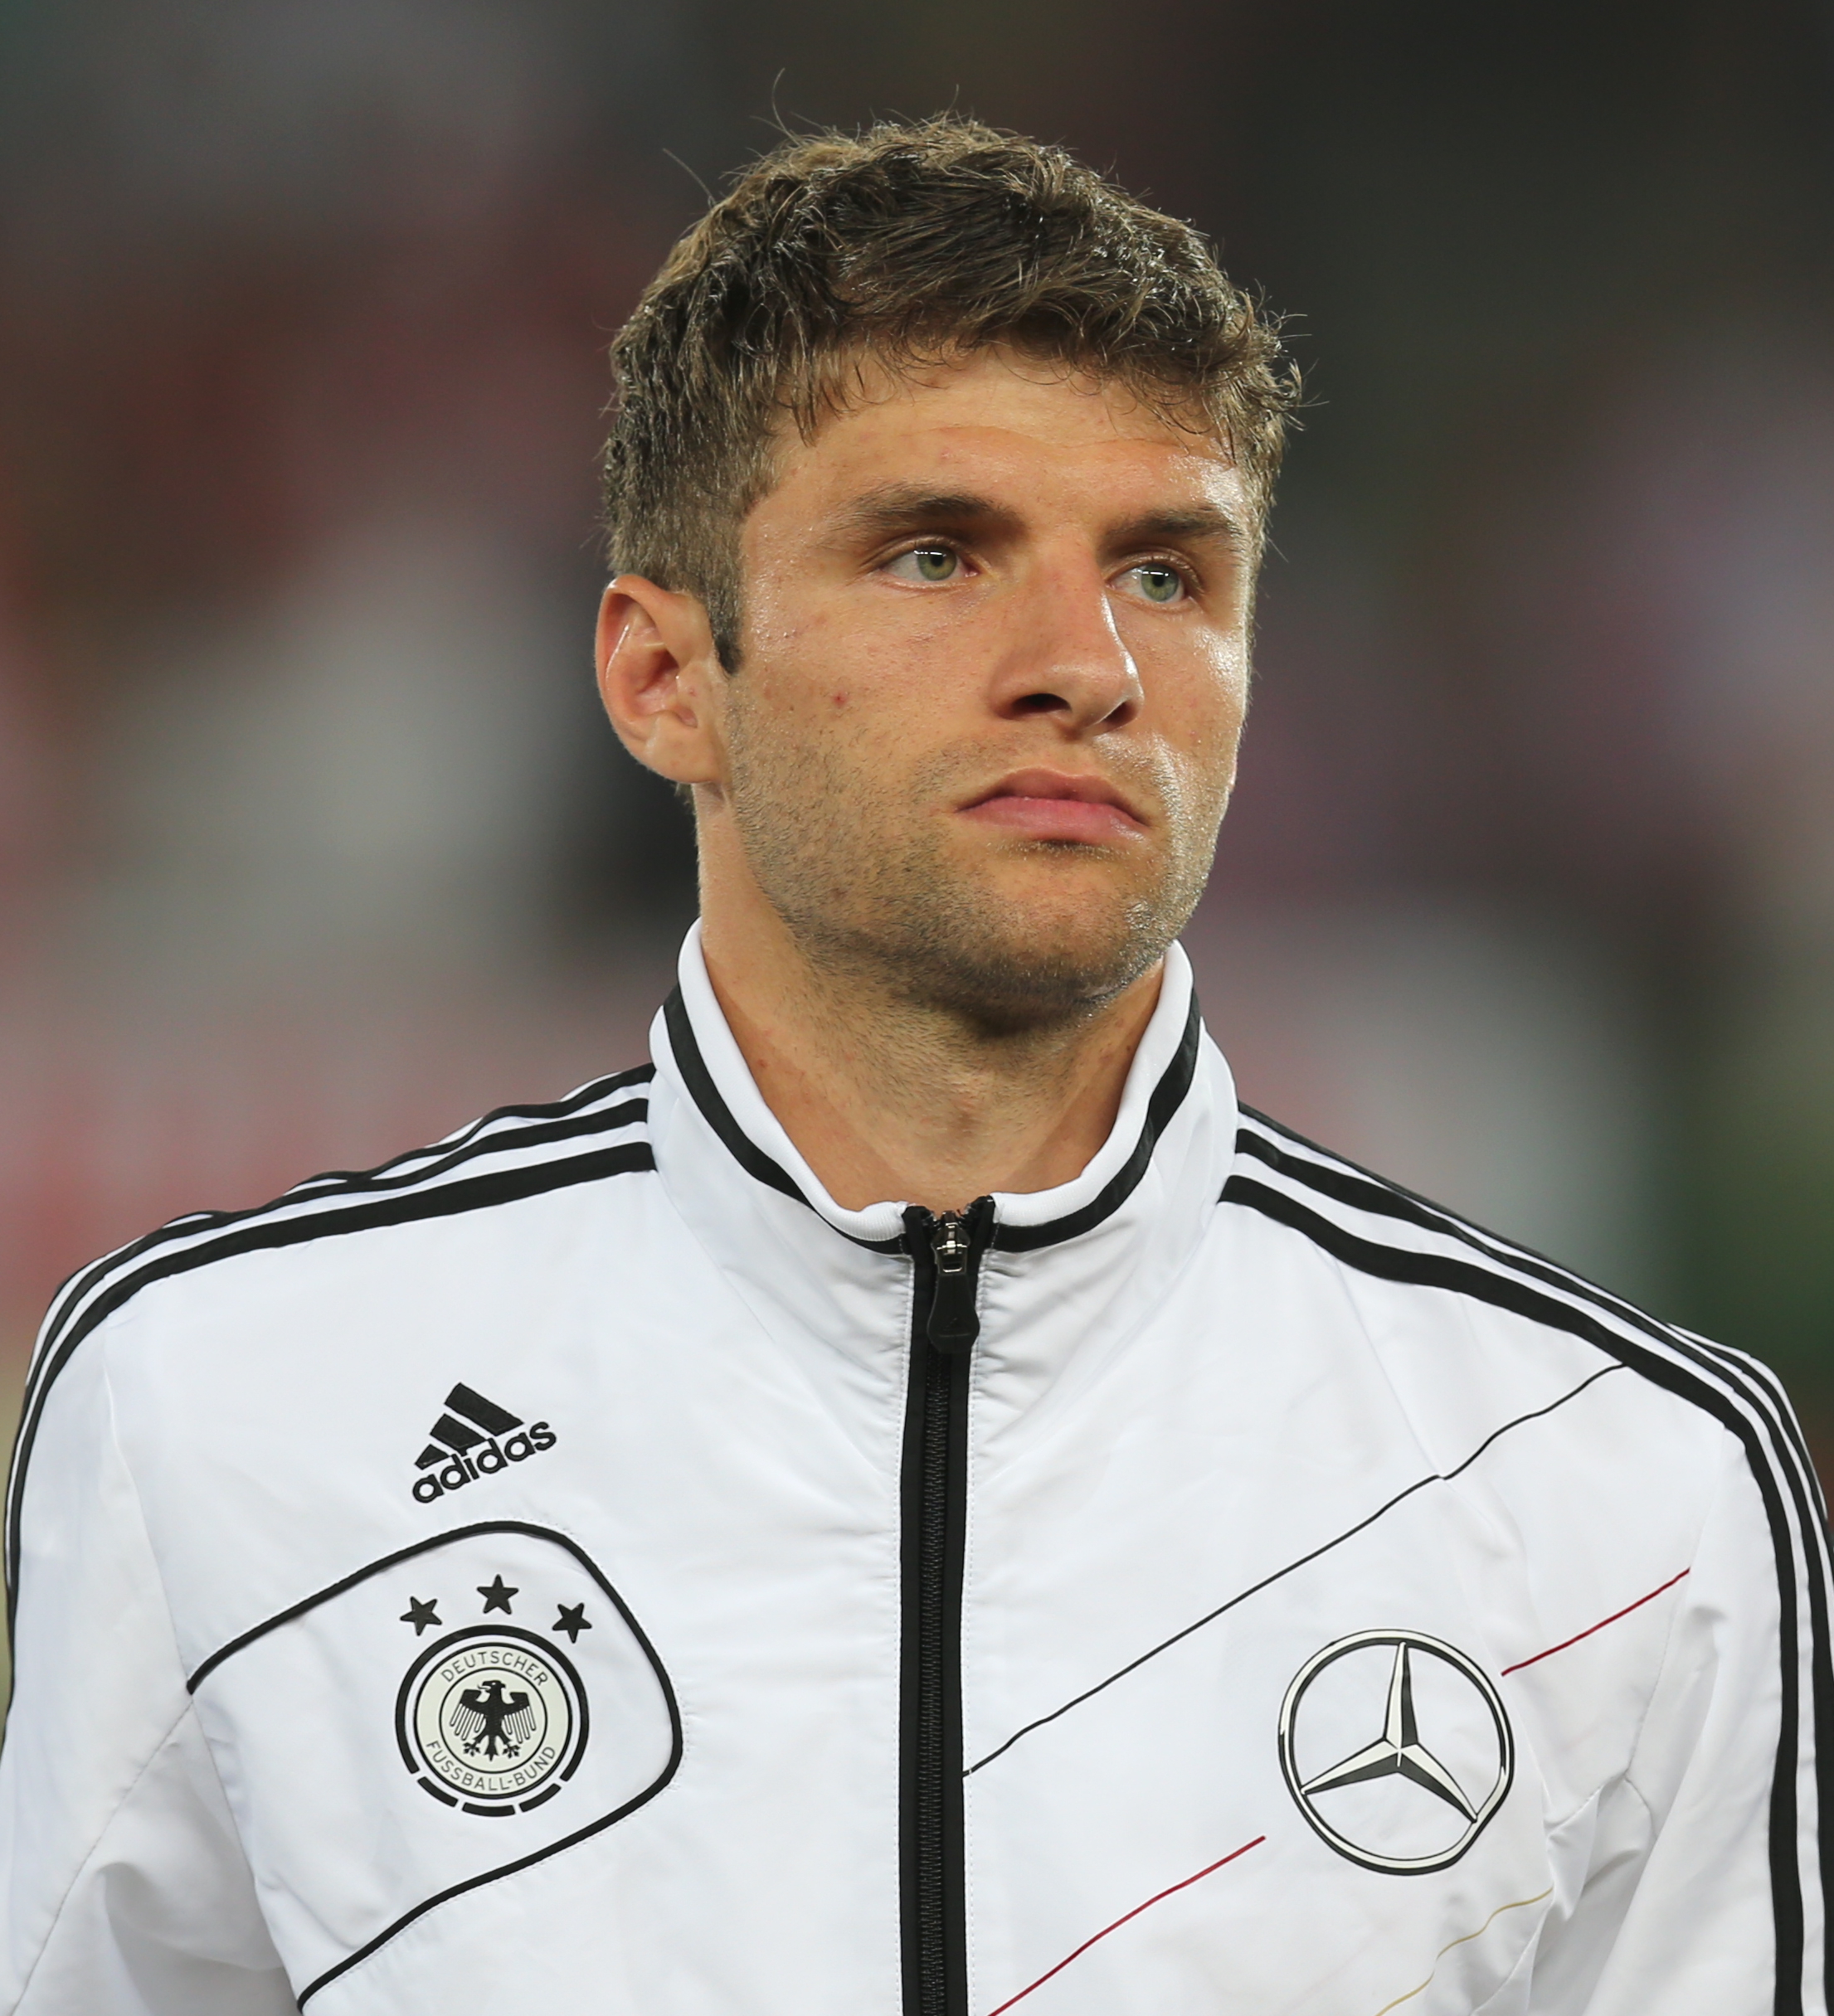 FIFA WC-qualification 2014 - Austria vs. Germany 2012-09-11 - Thomas Müller 01